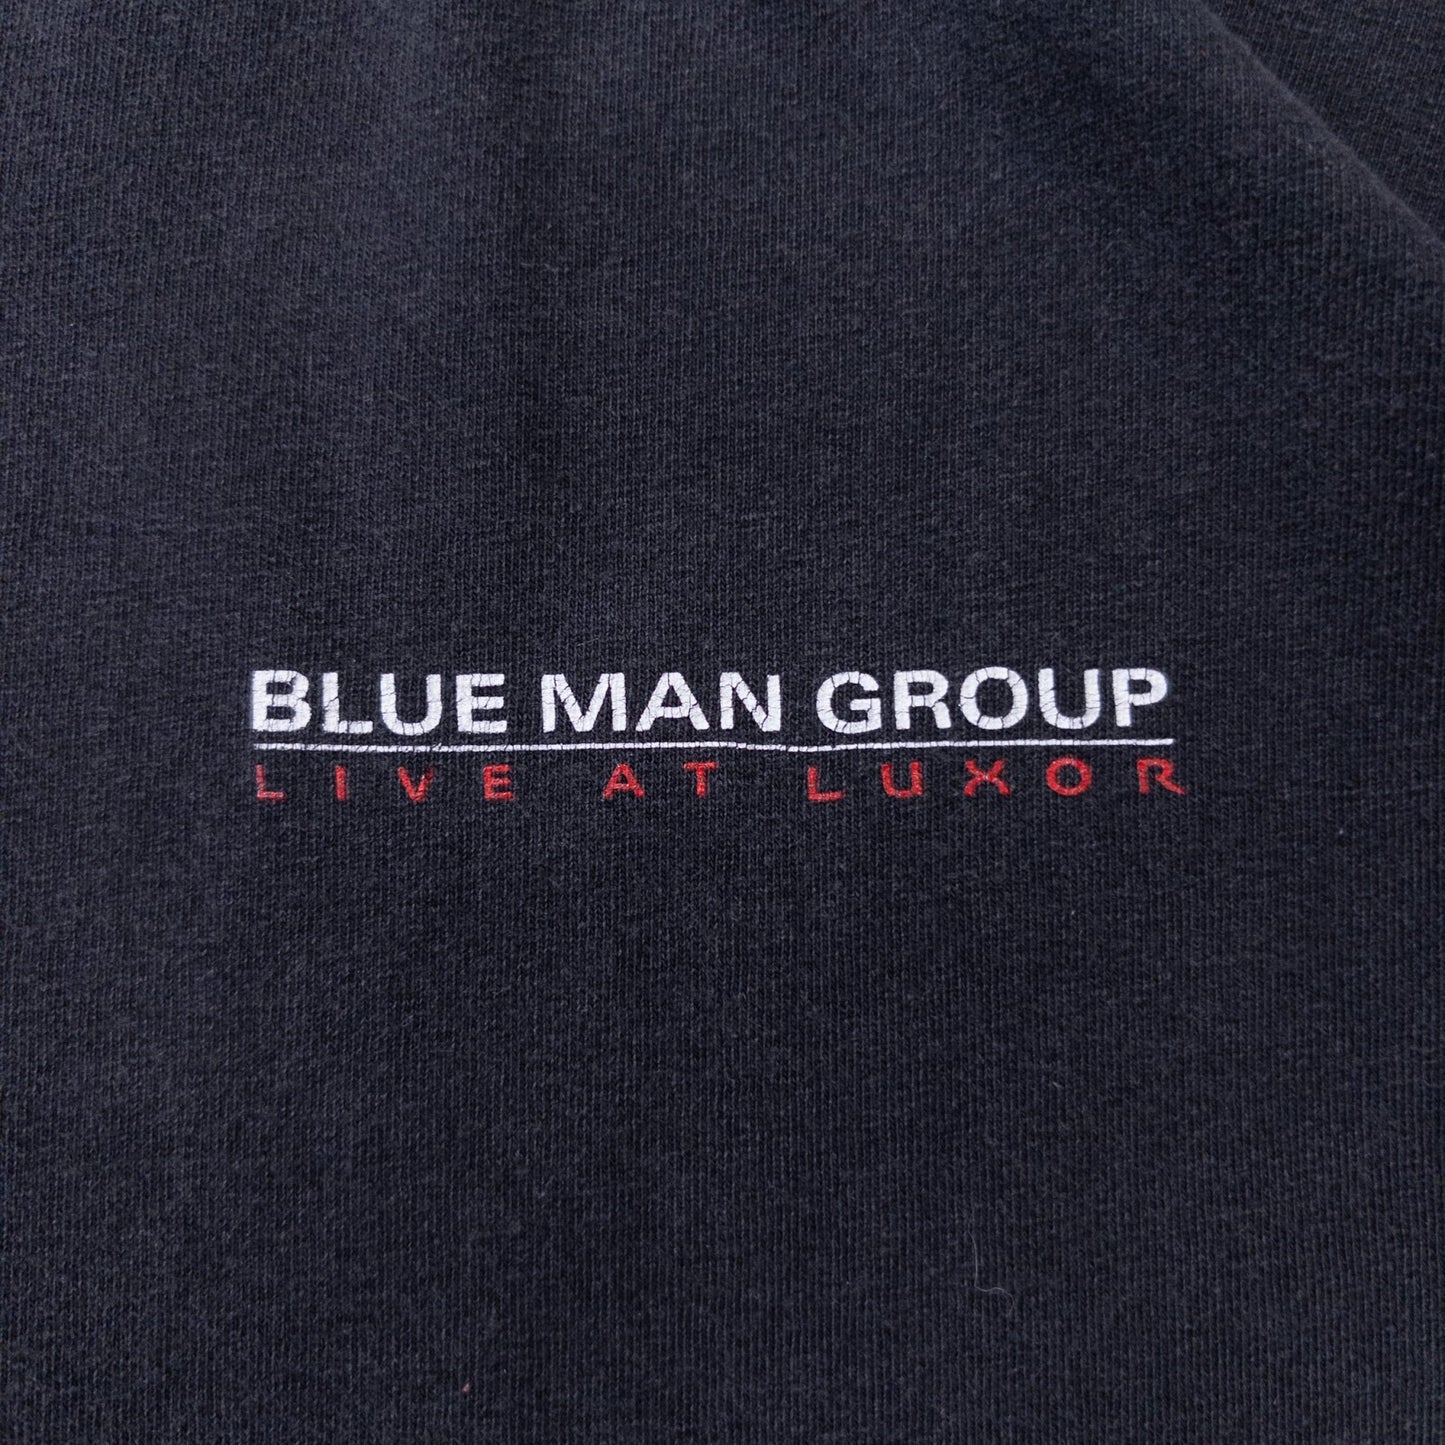 00s ”BLUE MAN GROUP” XL